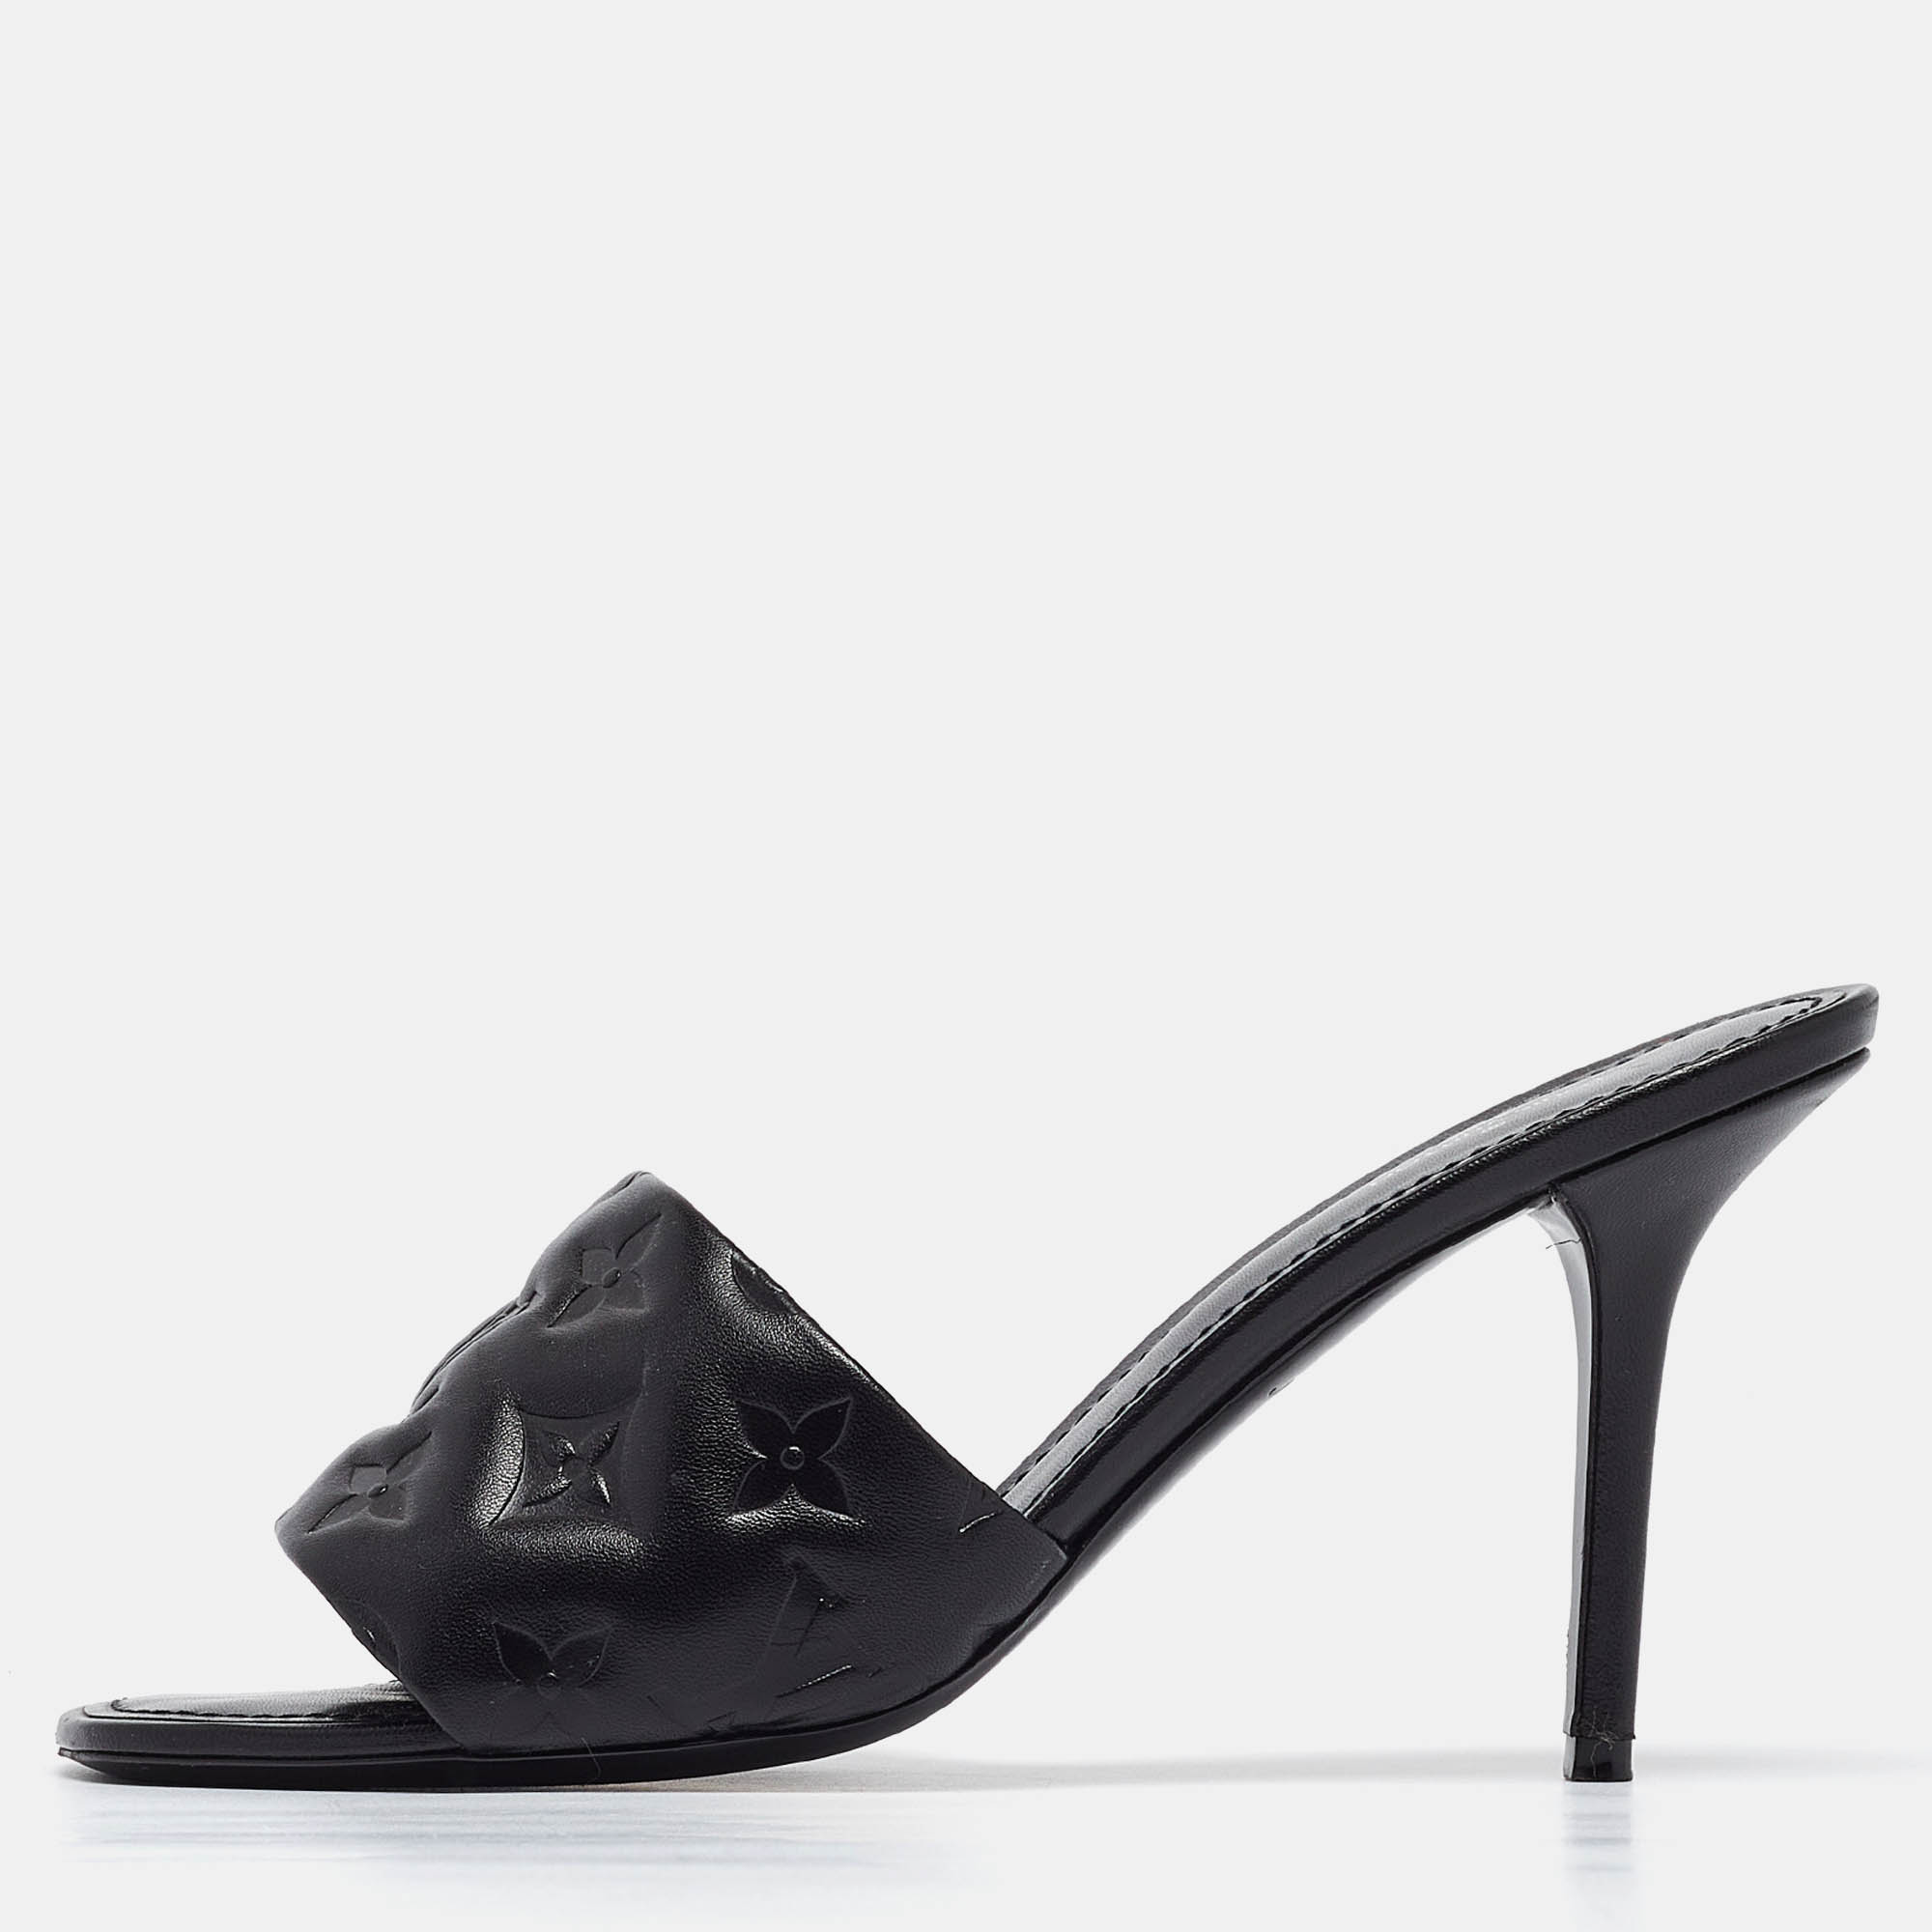 Louis vuitton black monogram embossed leather revival slide sandals size 39